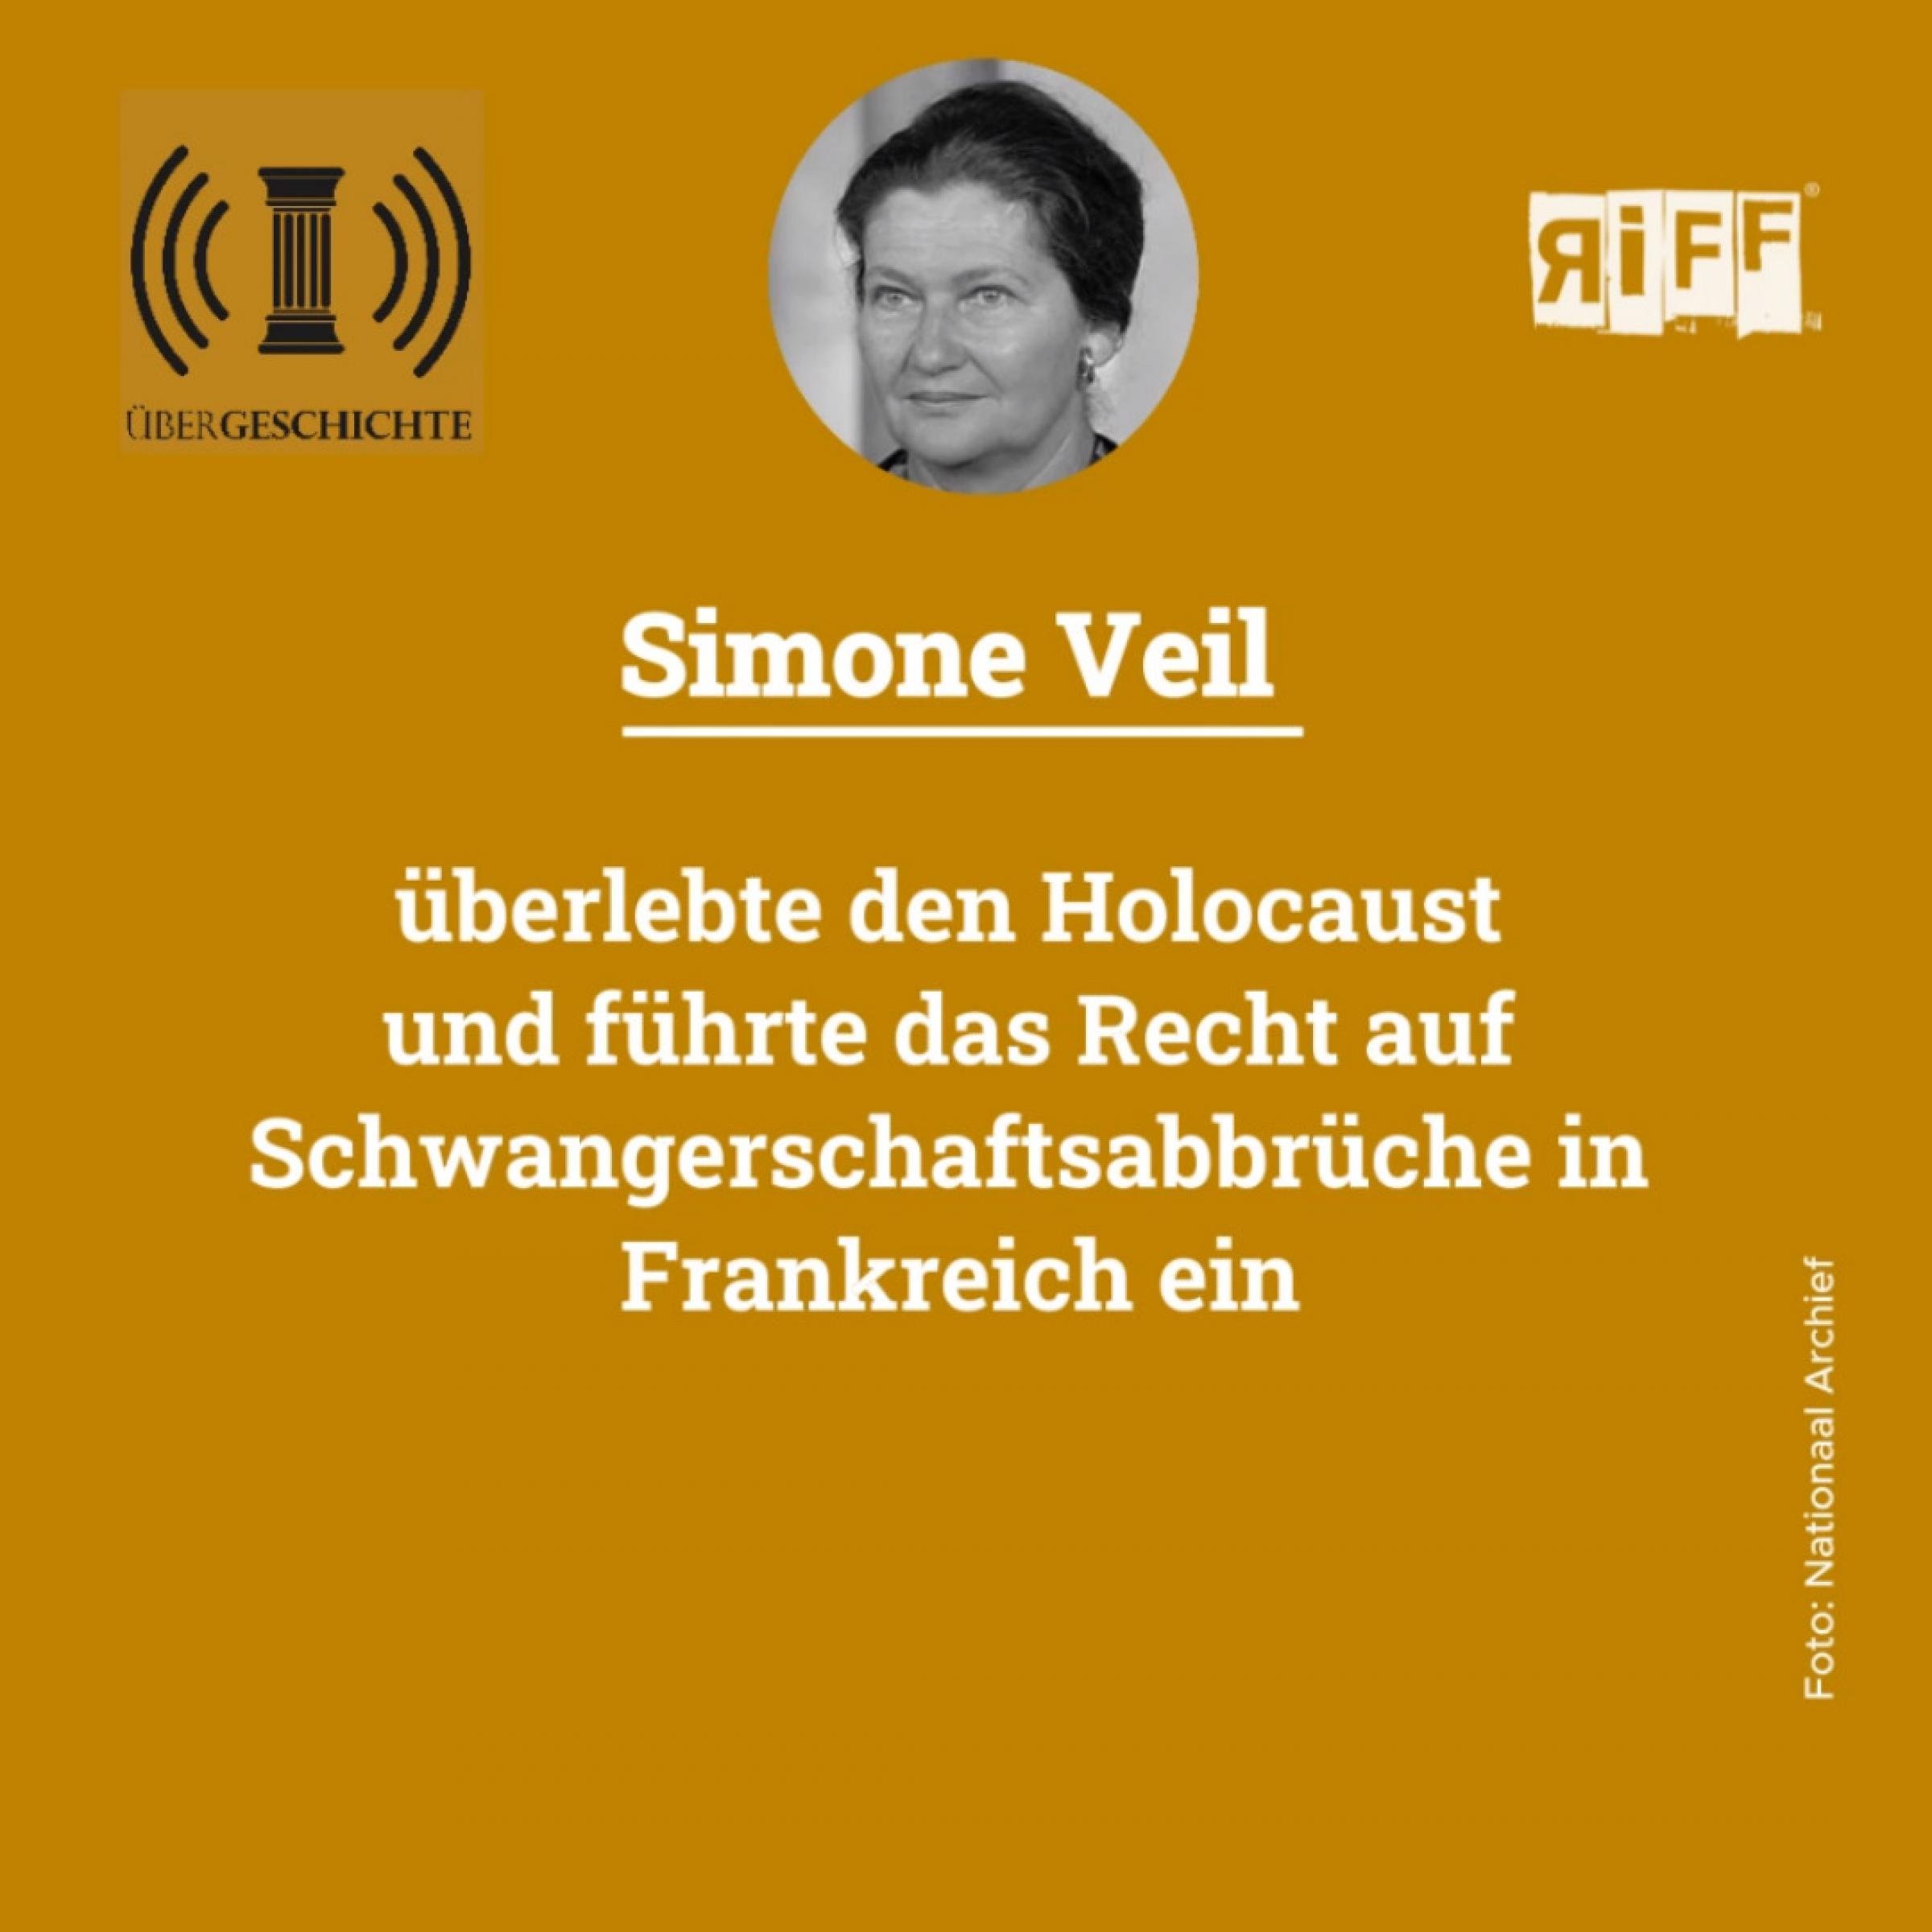 Gelbes Cover für Podcastfolge; Simone Veil